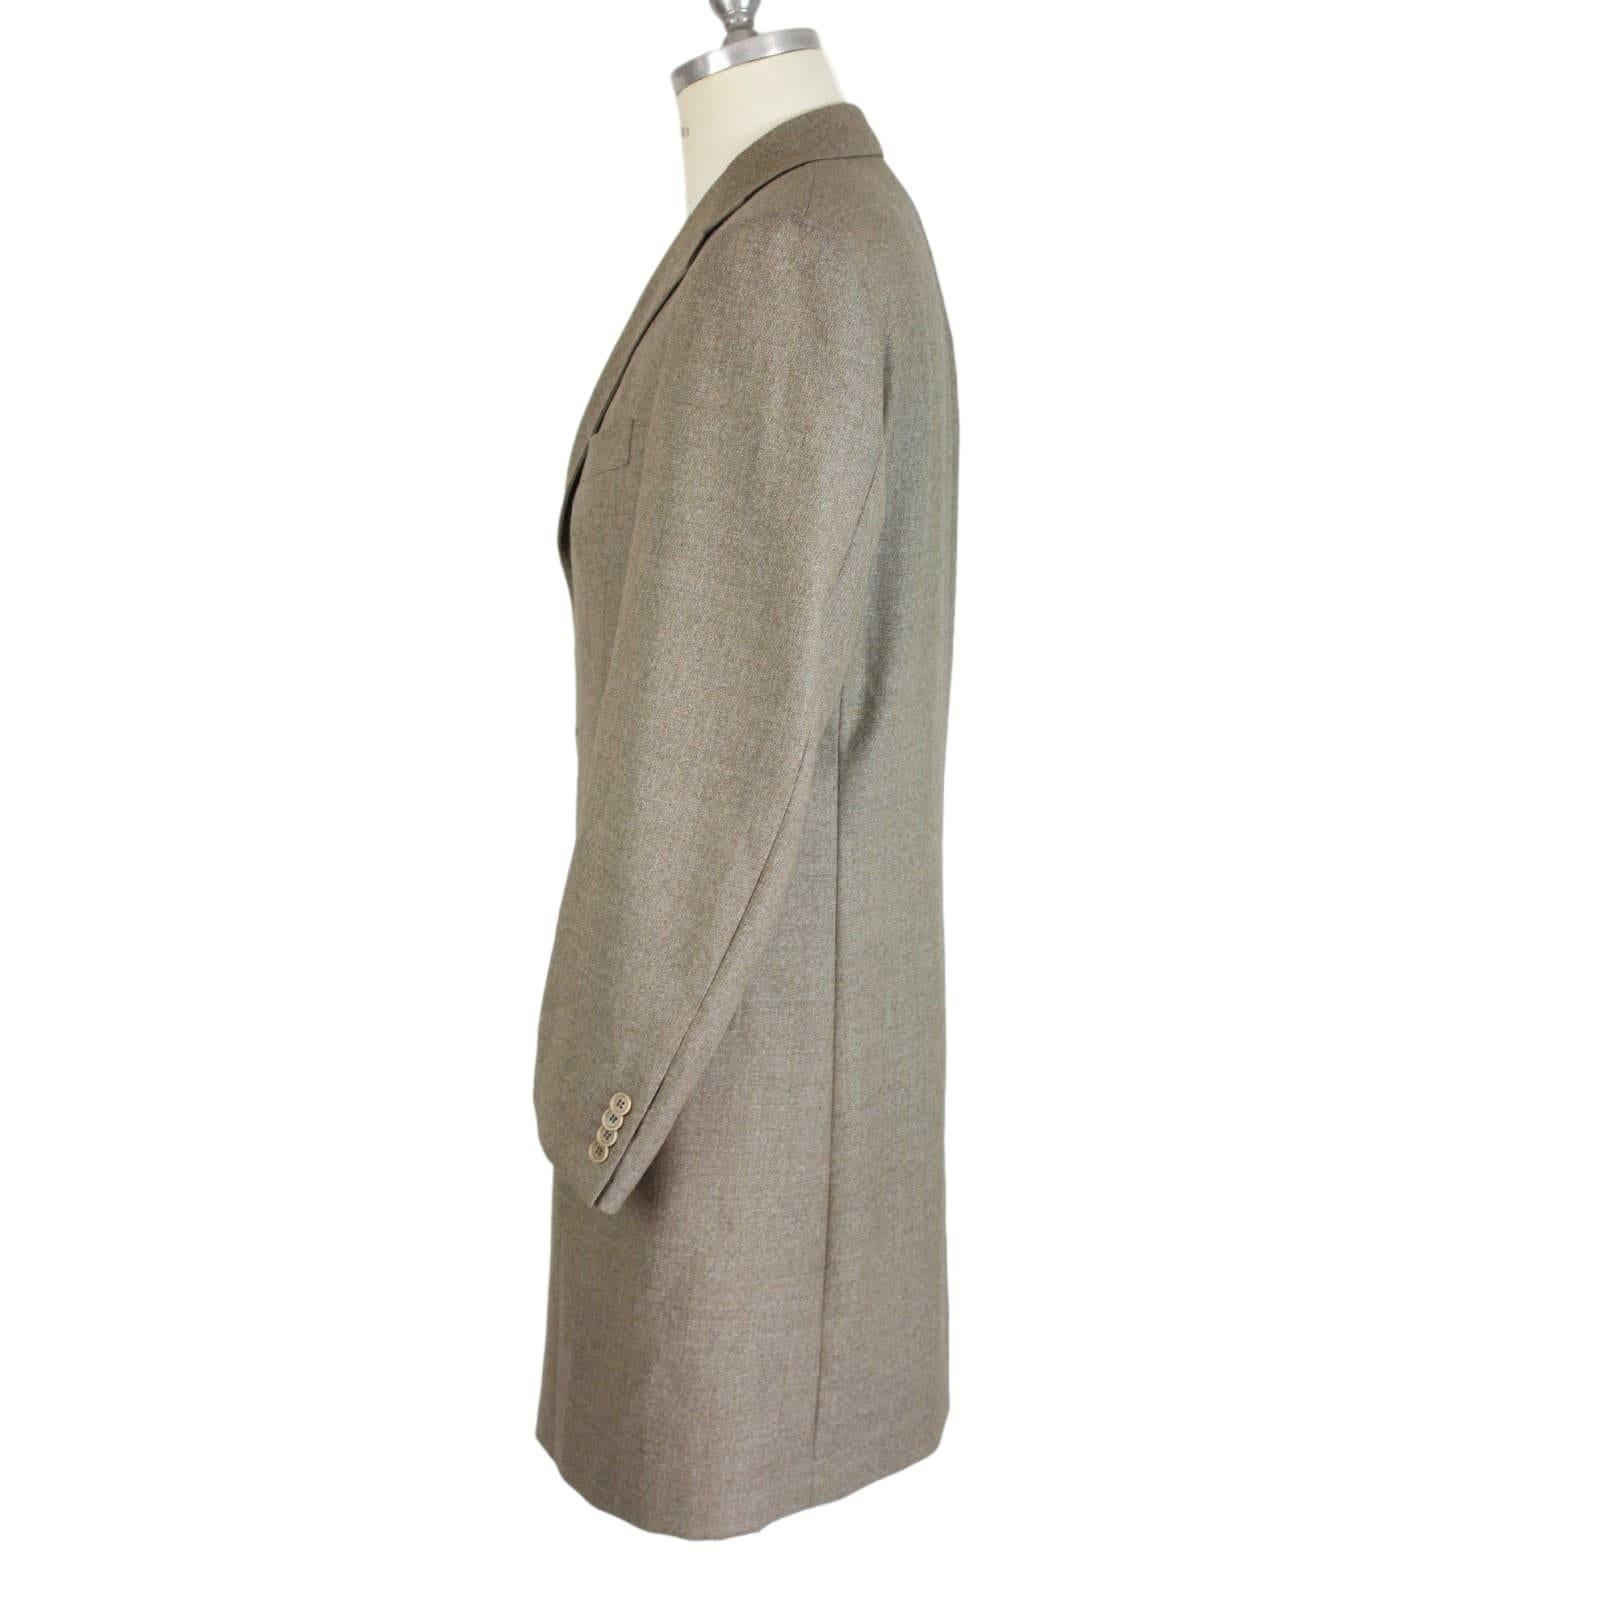 Beige Coat Loro Piana Zelander 100% New Zealand merino wool.
Measures:
Size 48 IT
Shoulders: 48 cm
Armpit to armpit: 55 cm.
Sleeves: 63 cm
Length: 104 cm
Composition: 100% merino wool
Condition: excellent vintage condition